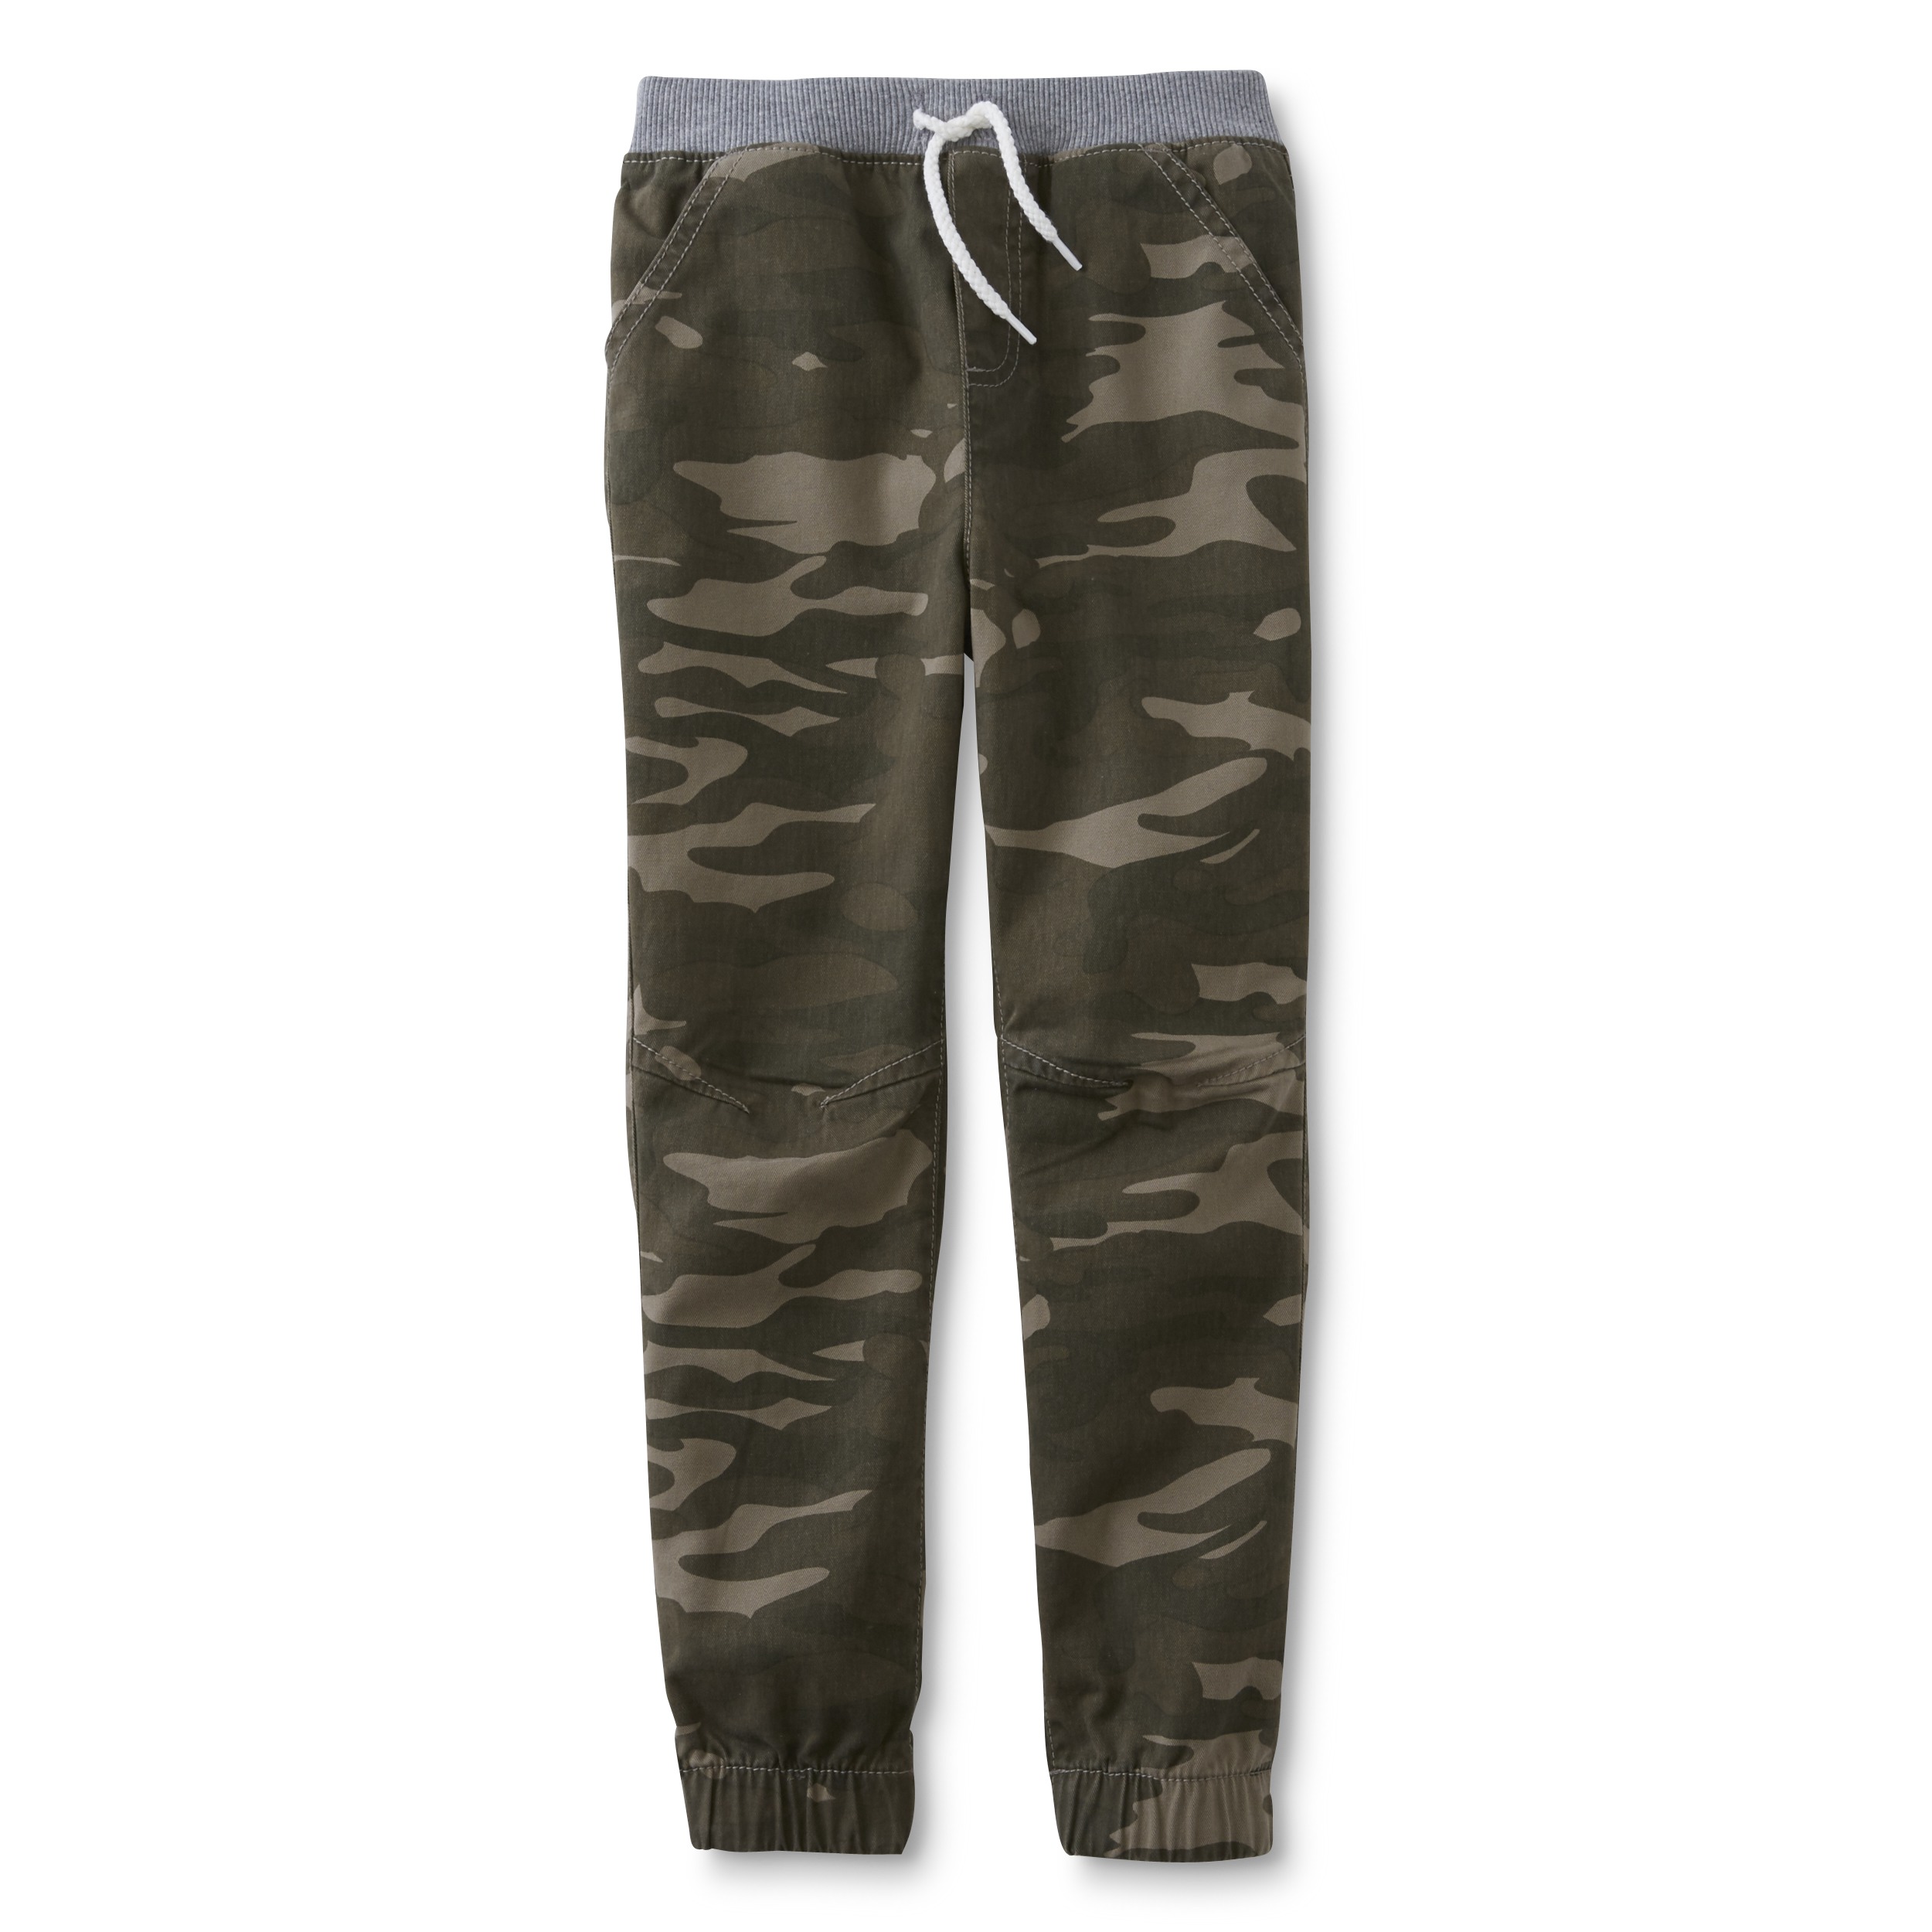 Toughskins Infant & Toddler Boys' Jogger Pants - Camouflage